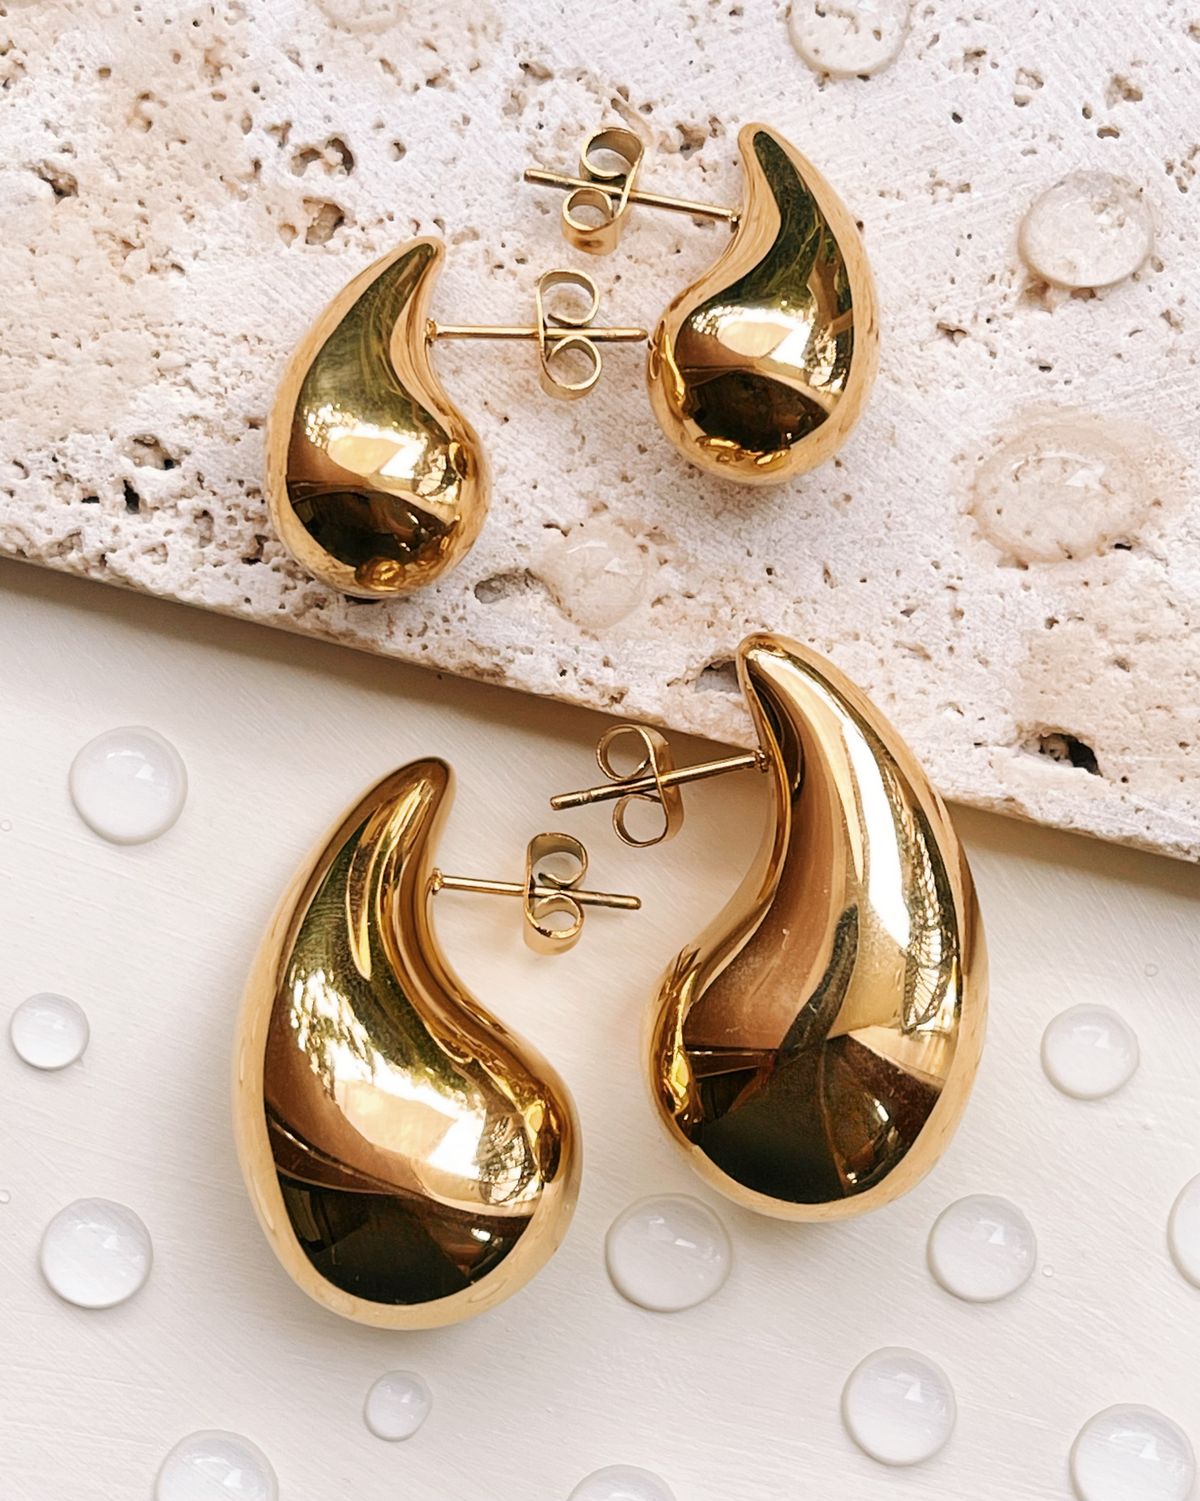 Theodora Chunky Teardrop Design Gold Stud Drop Earrings